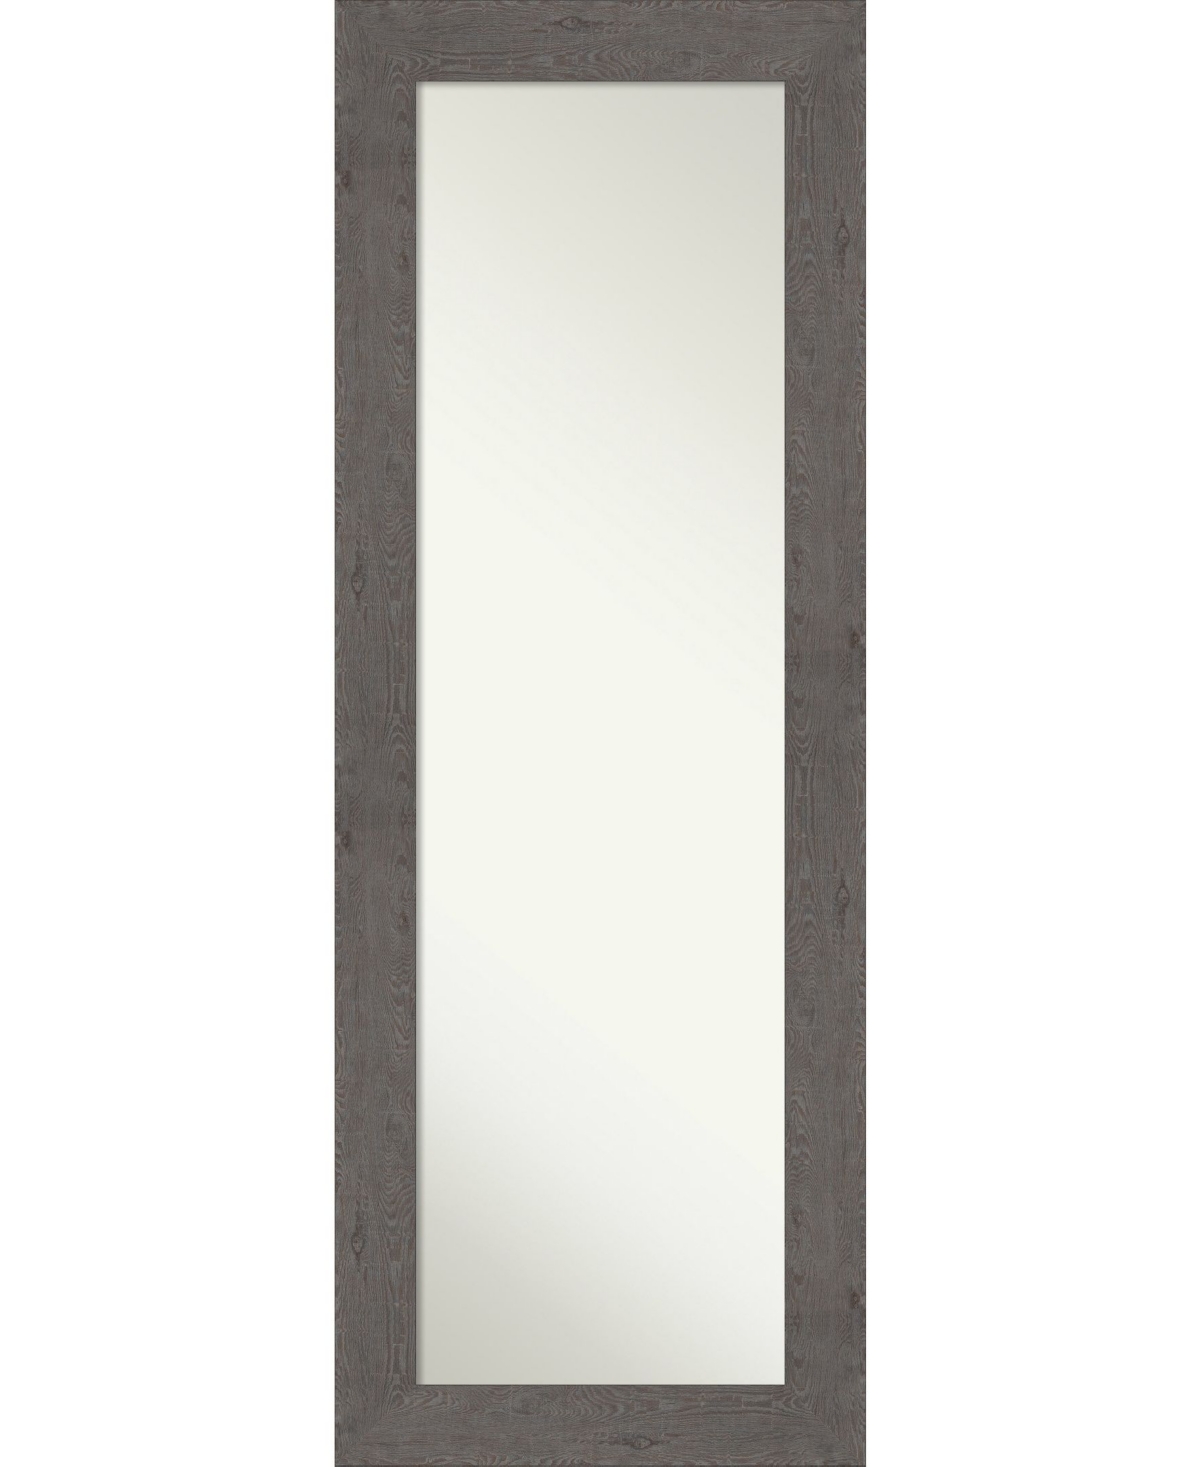 Rustic Plank on The Door Full Length Mirror, 19.38" x 53.38" - Gray